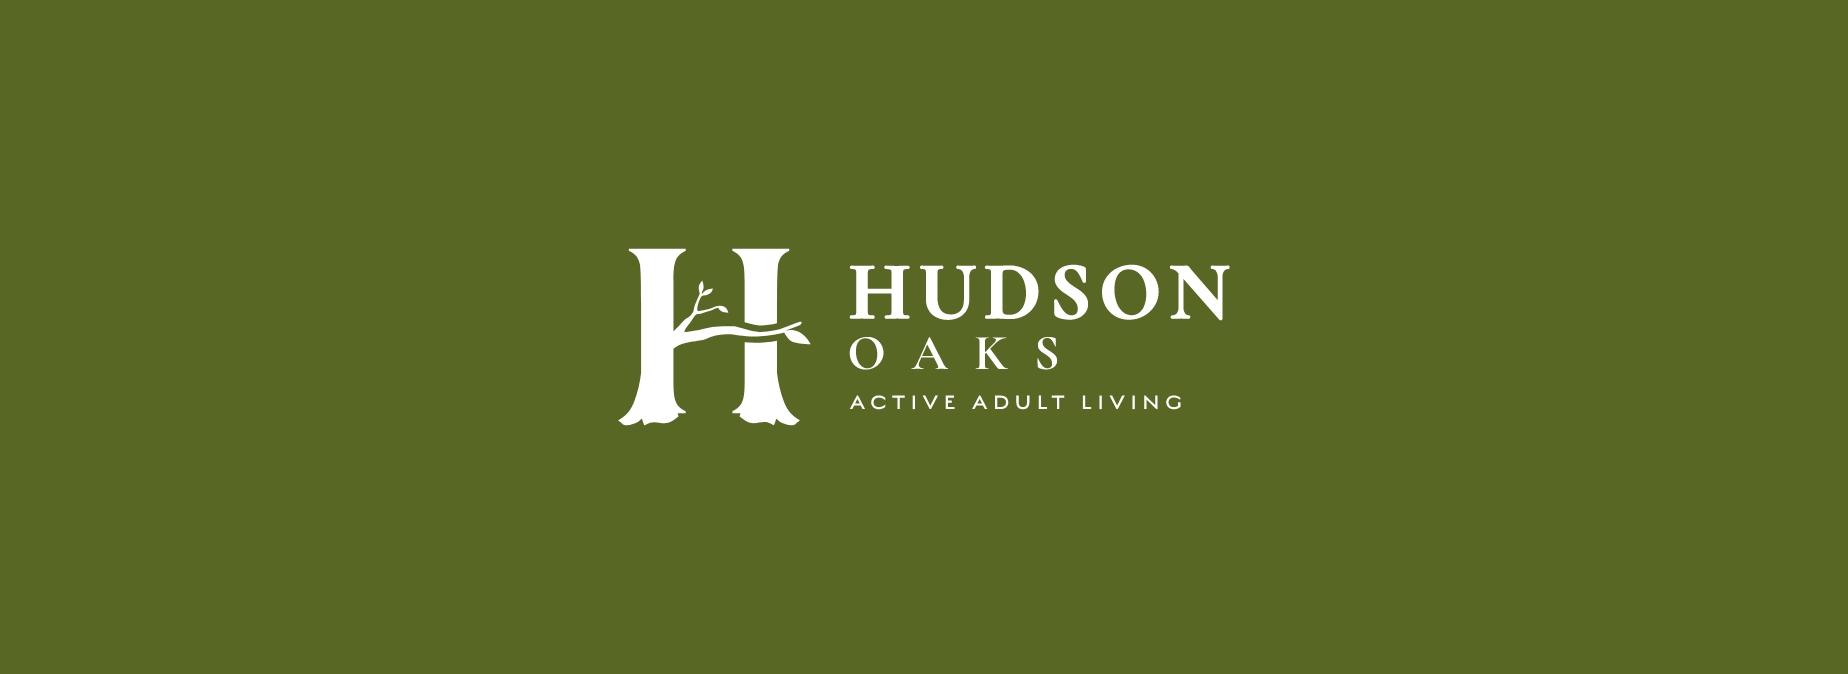 Hudson Oaks Image